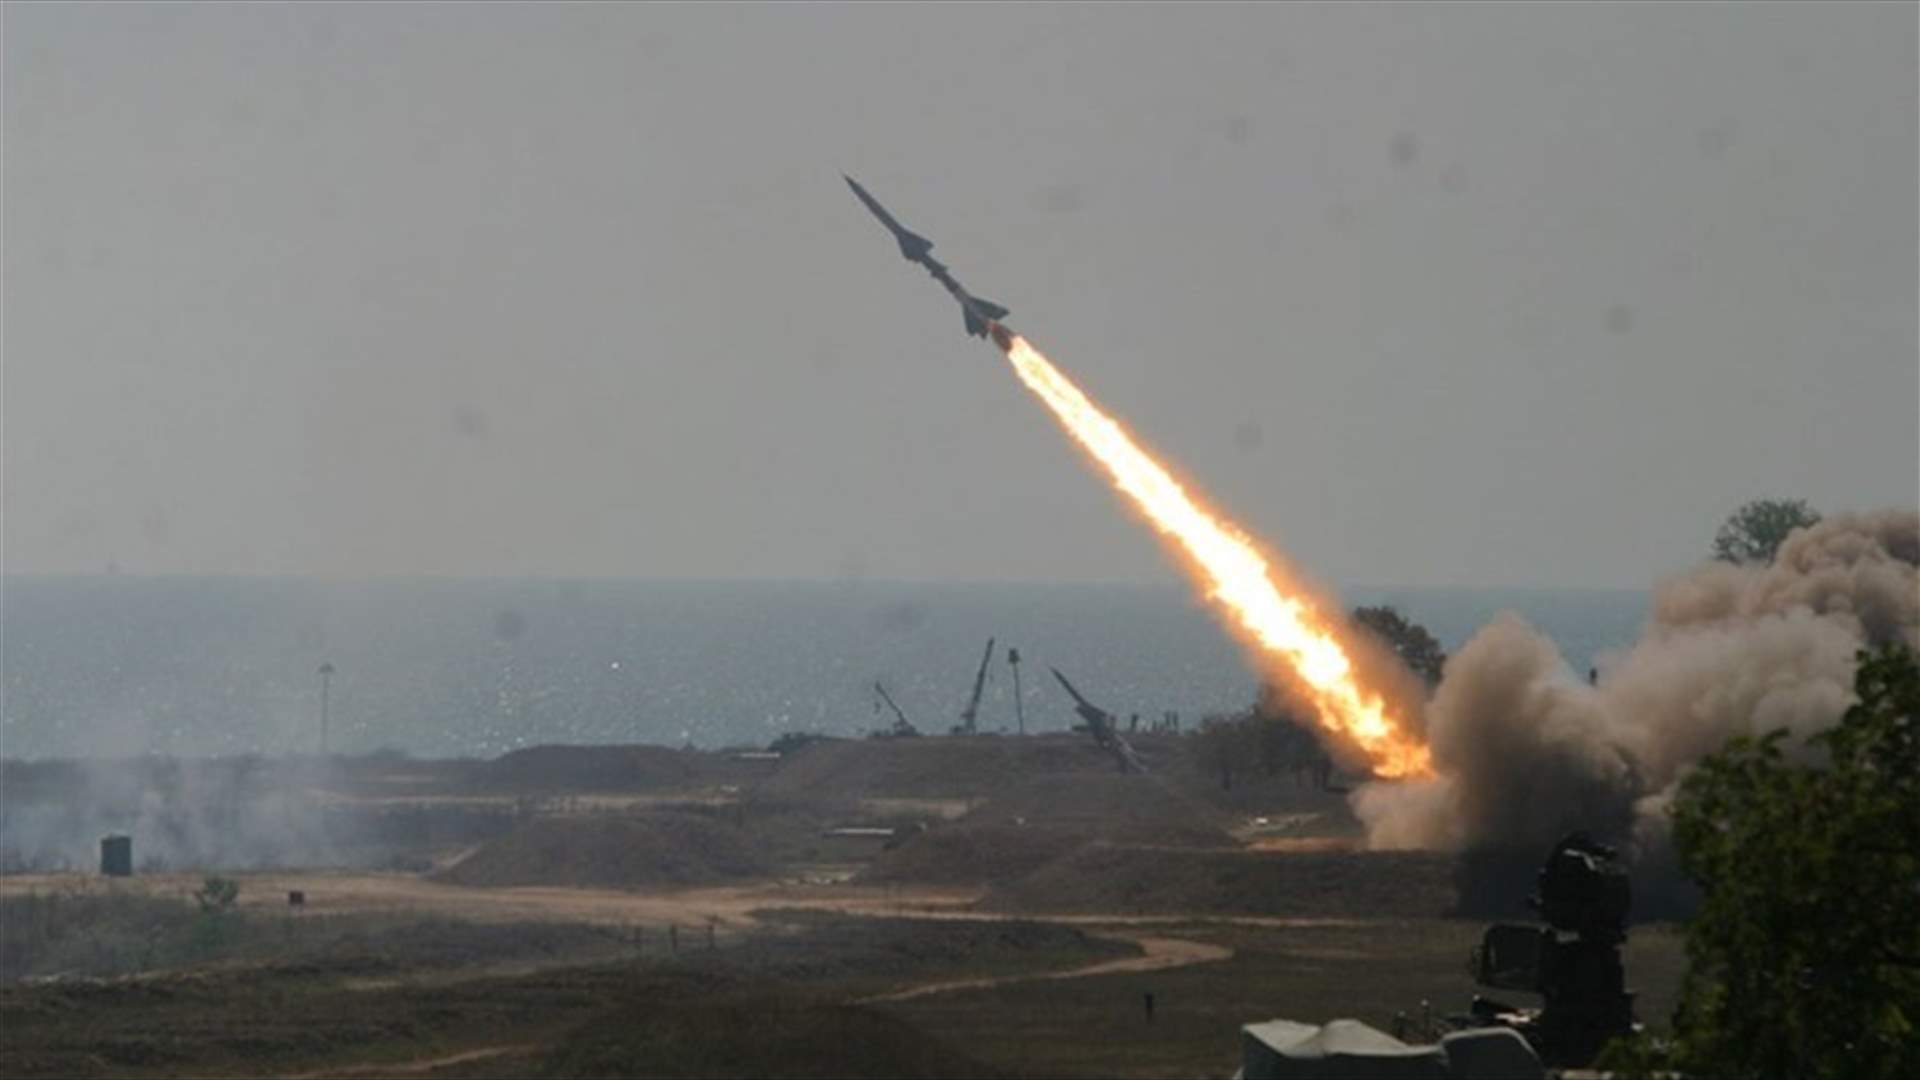 Gaza militant rocket hits Israel, Israel responds with air strike, shells